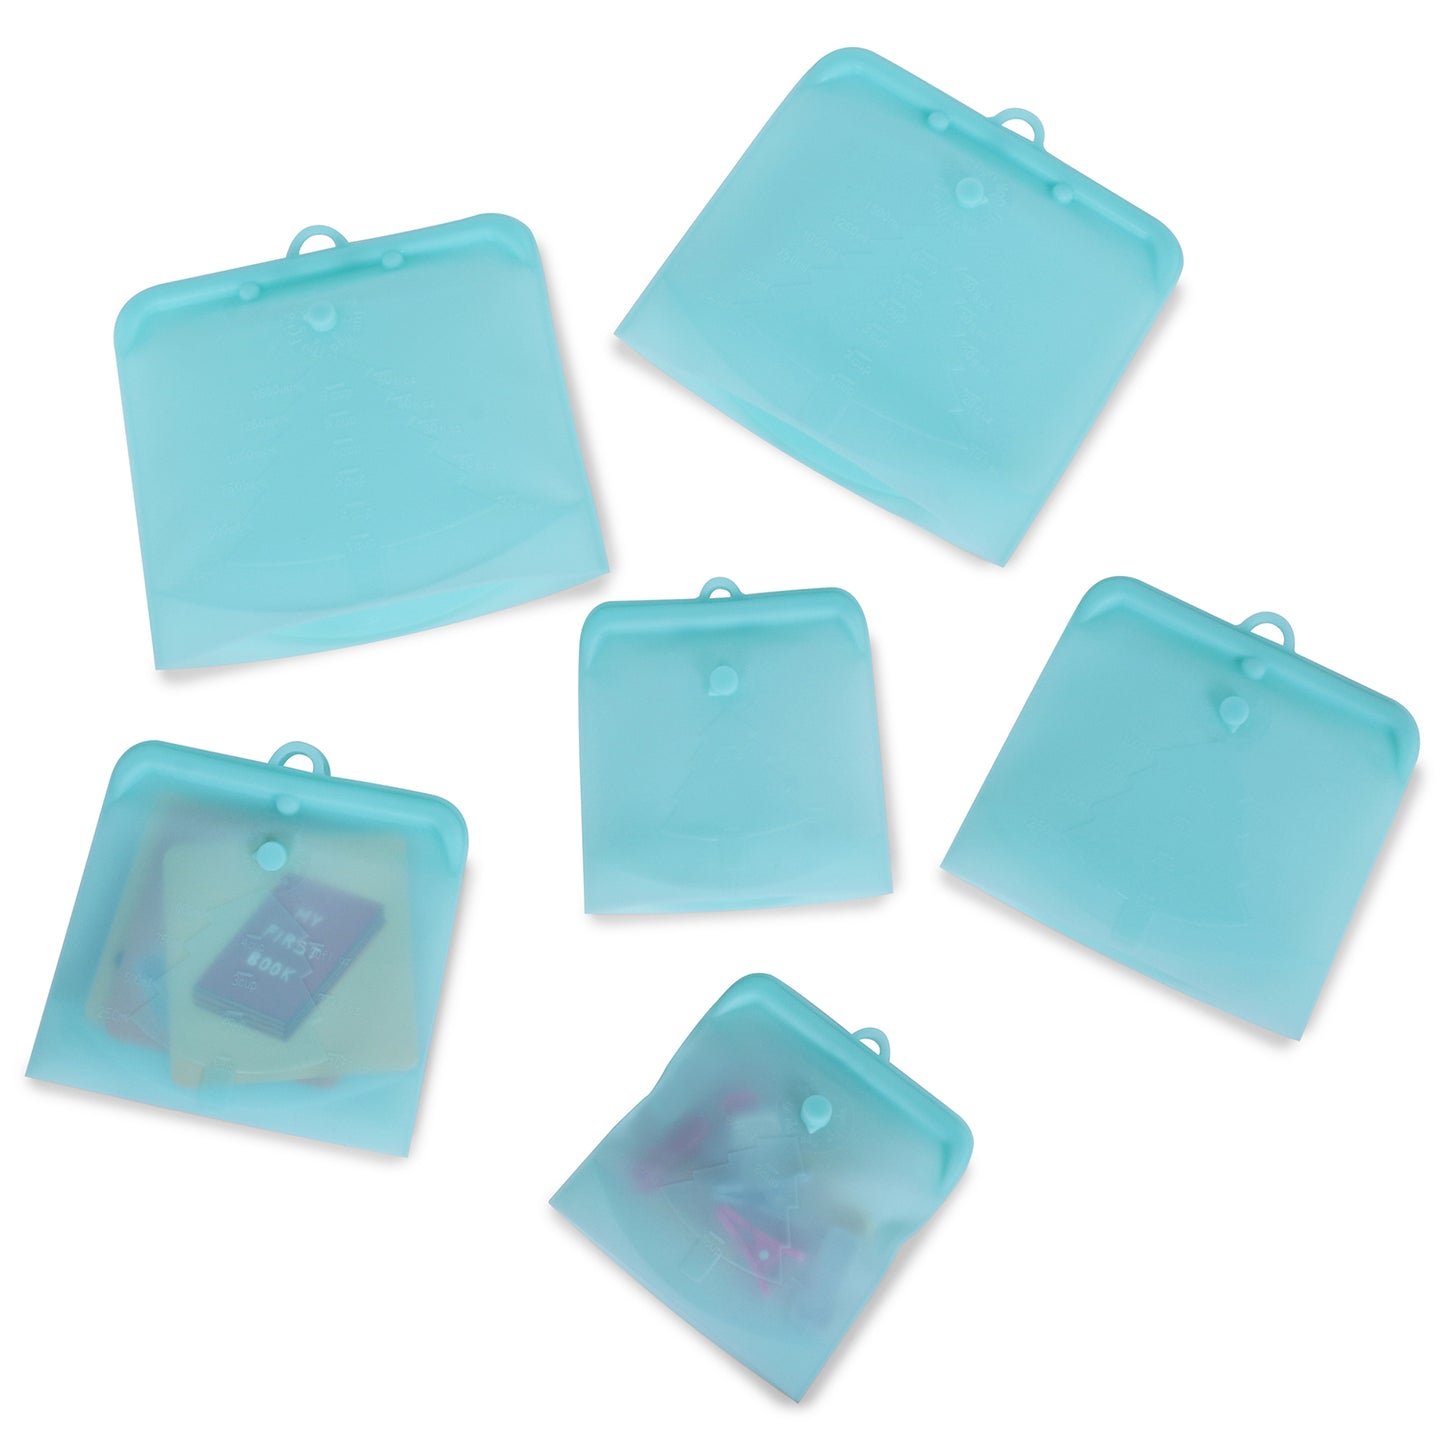 6 Reusable Silicone Storage Bag 3 sizes, 2 Small + 2 Medium + 2 Large